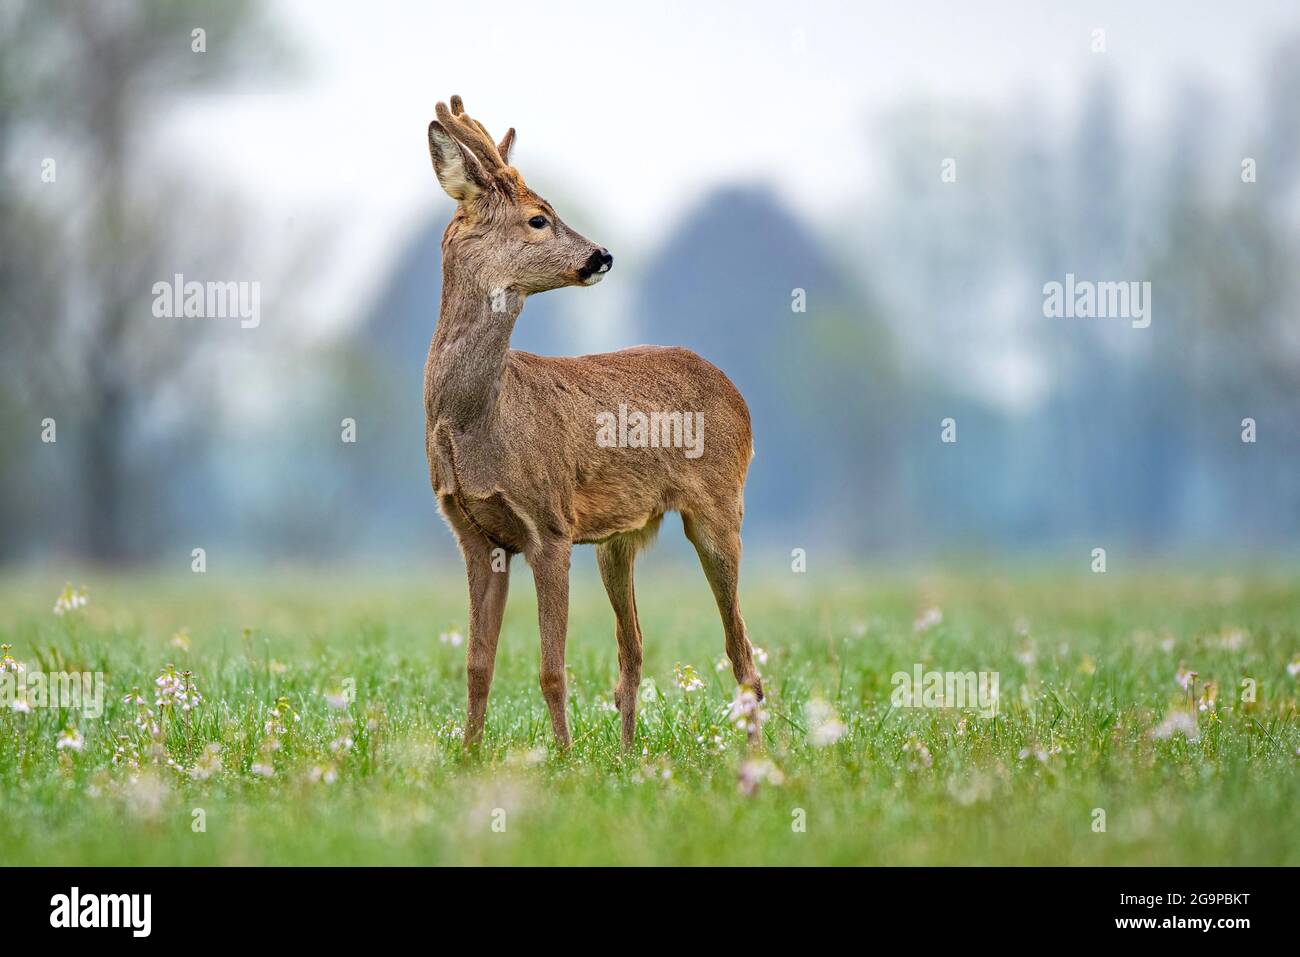 Wild roe deer standing in a field Stock Photo